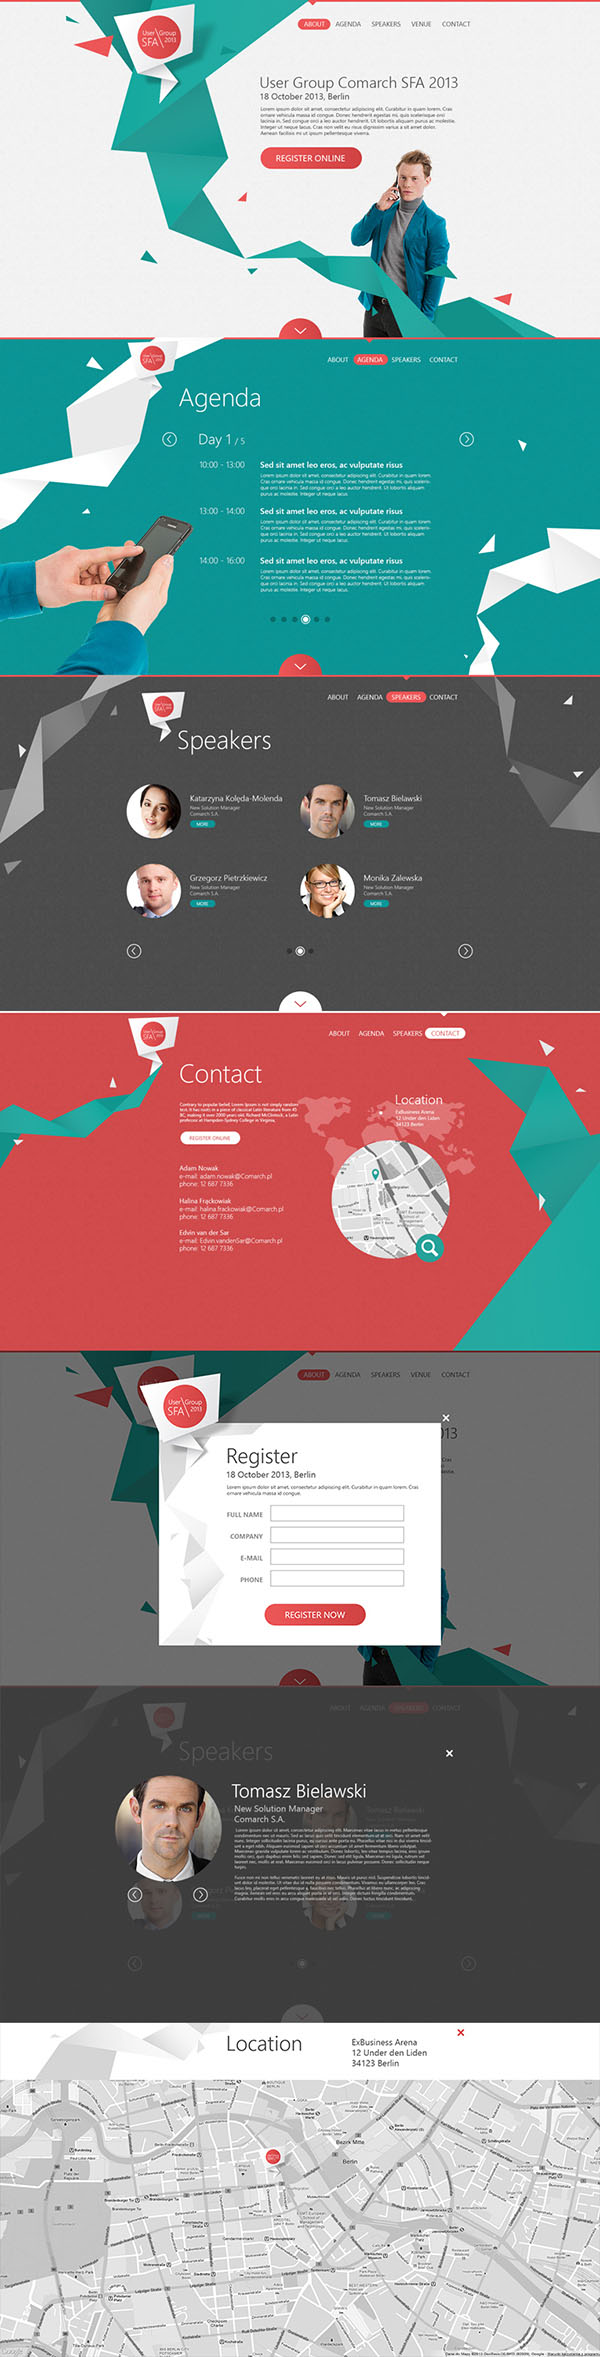 User Group SFA 2013 - User Interface and Web Design by Leszek Jędraszczak